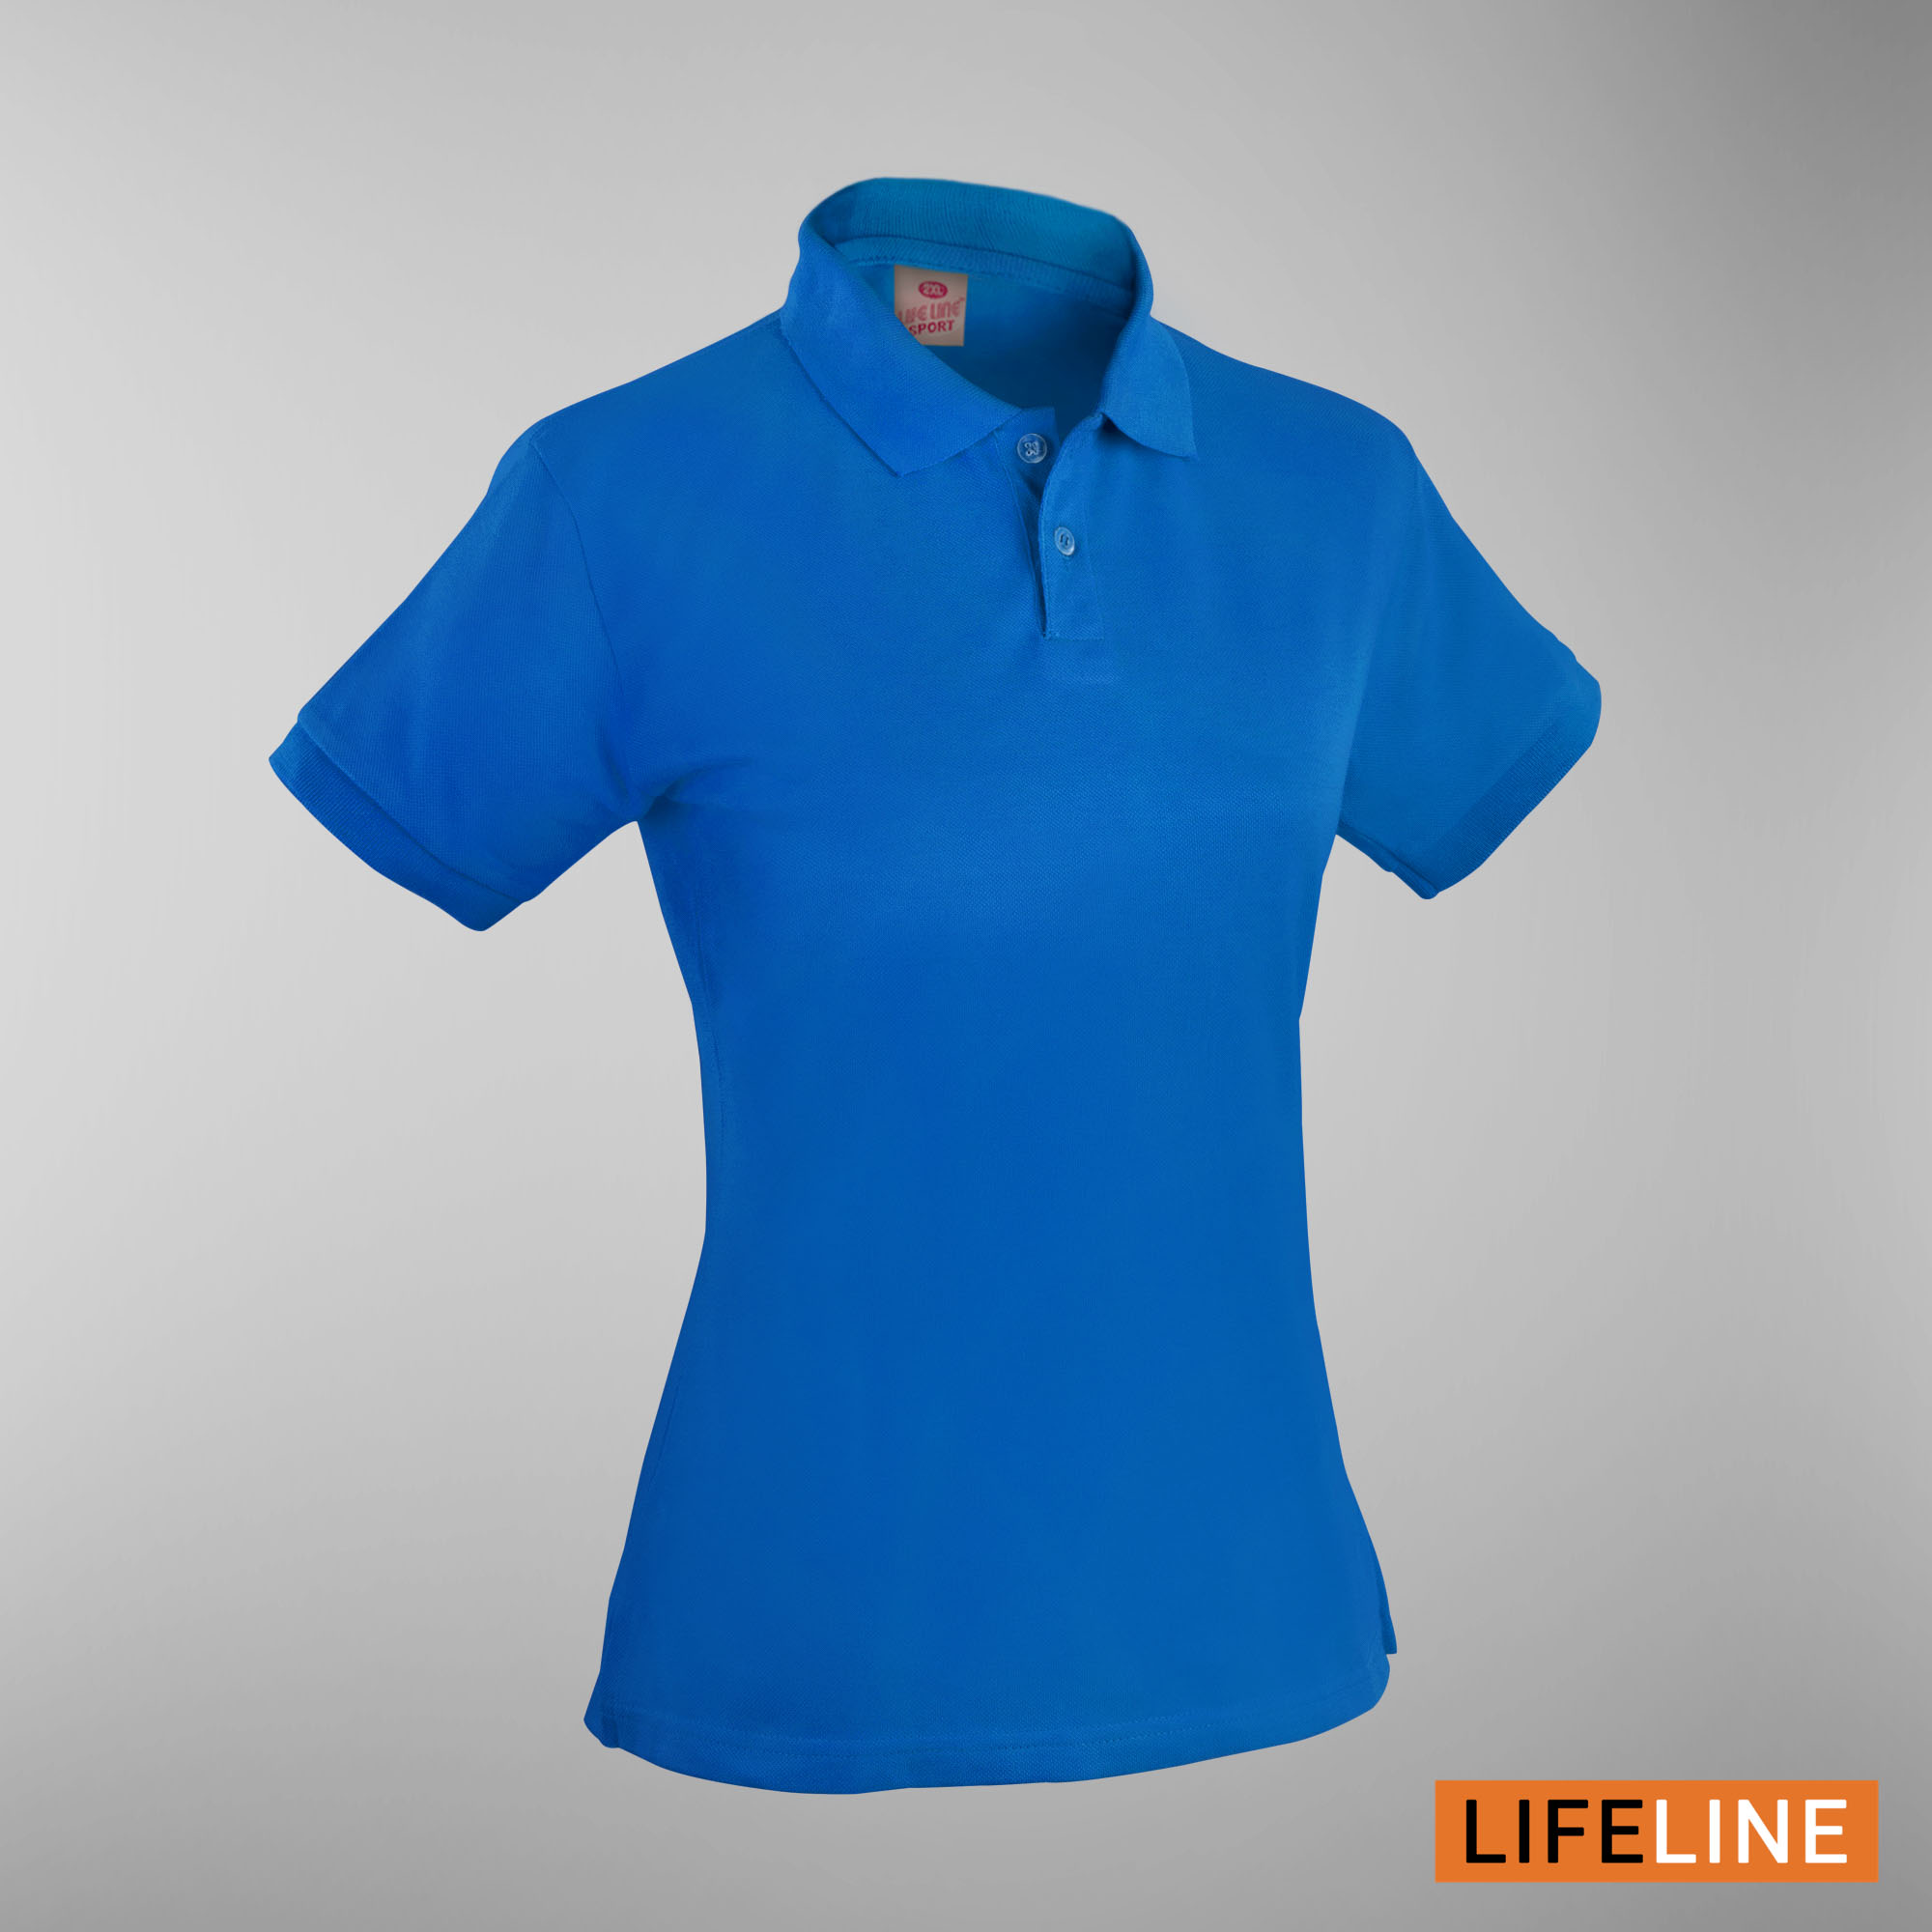 Lifeline Ladies’ Poloshirt (Aqua Blue) (Petite Sizes)